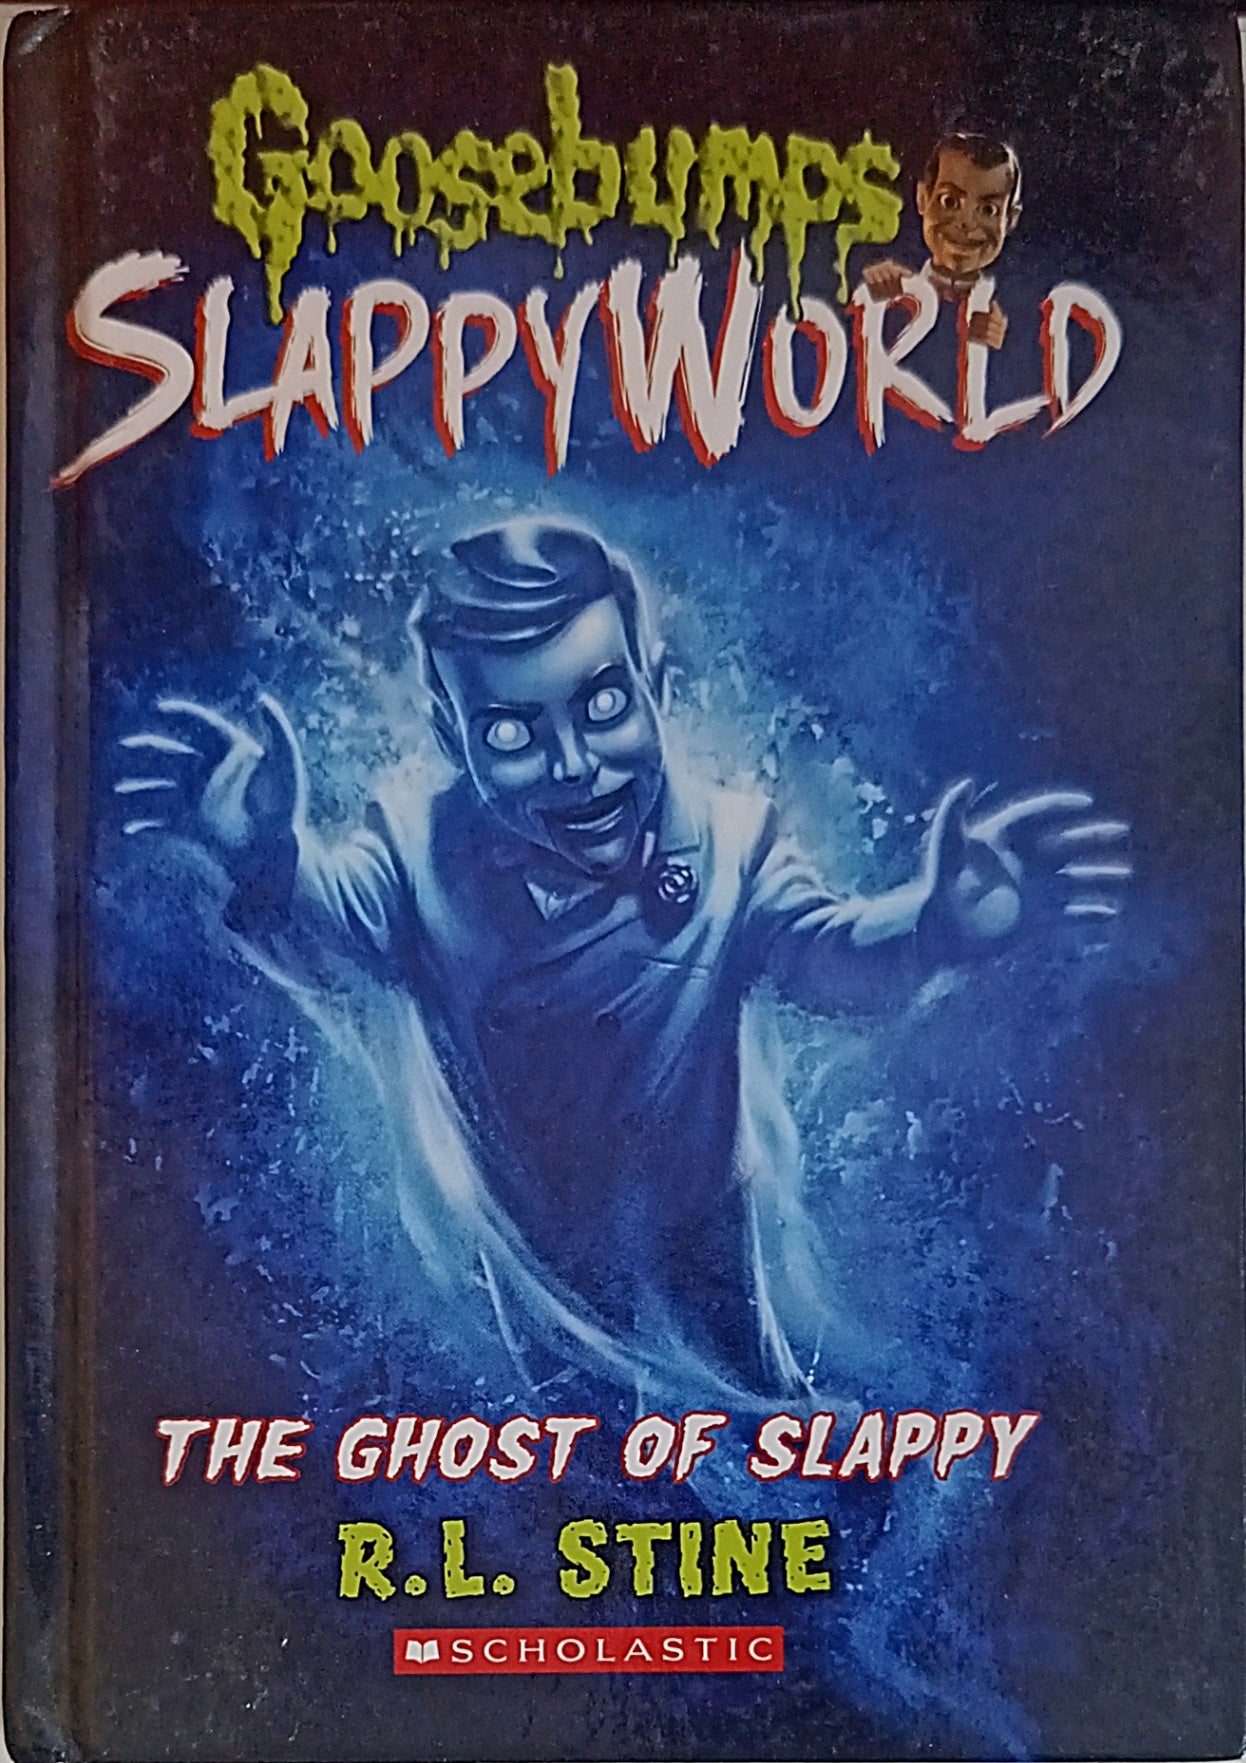 Goosebumps Slappyworld The Ghost of Slappy